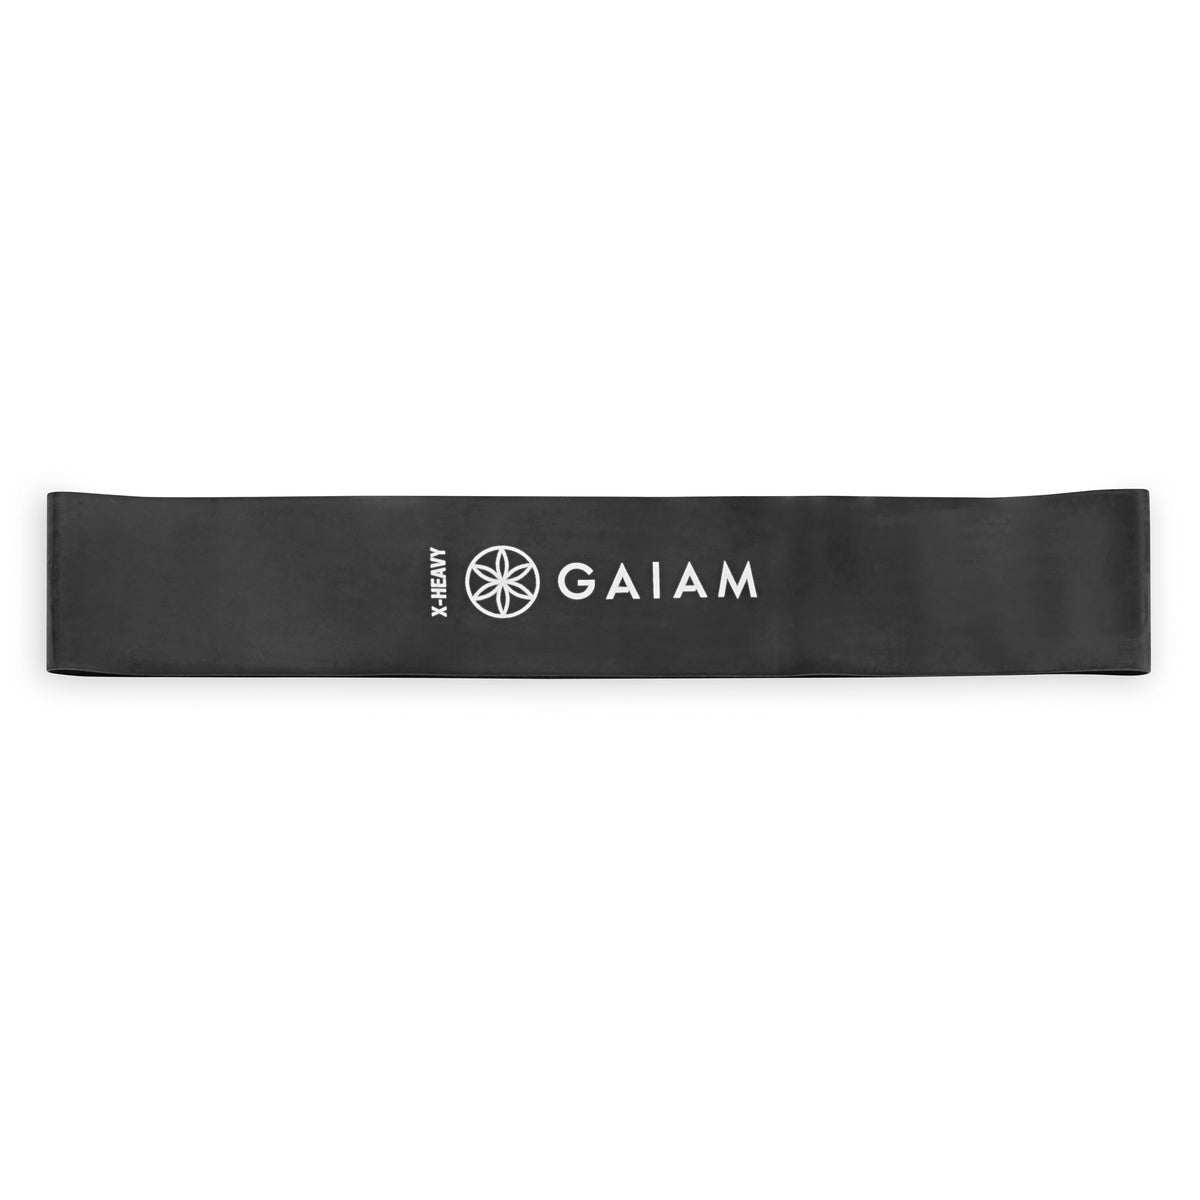 Gaiam Restore Mini Loop Bands 5-Pack extra heavy